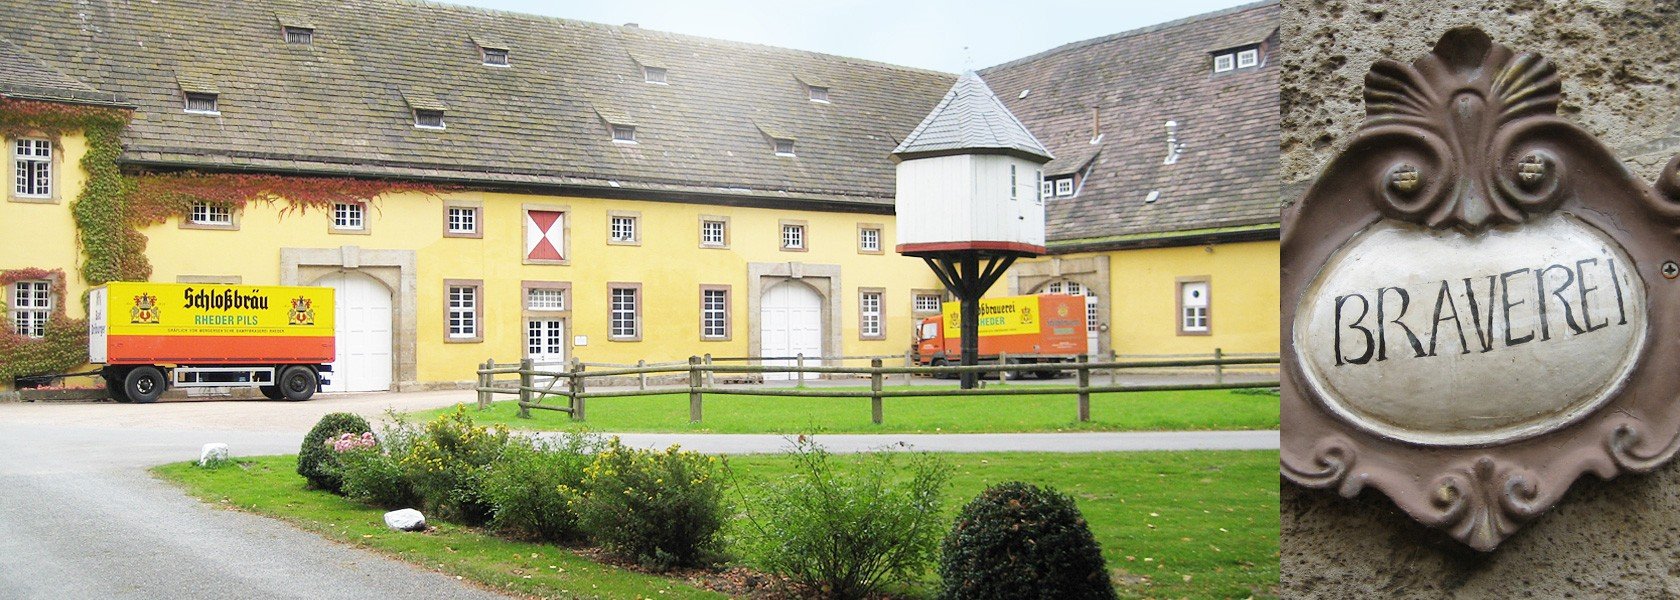 Schloßbrauerei Rheder brewery from Germany